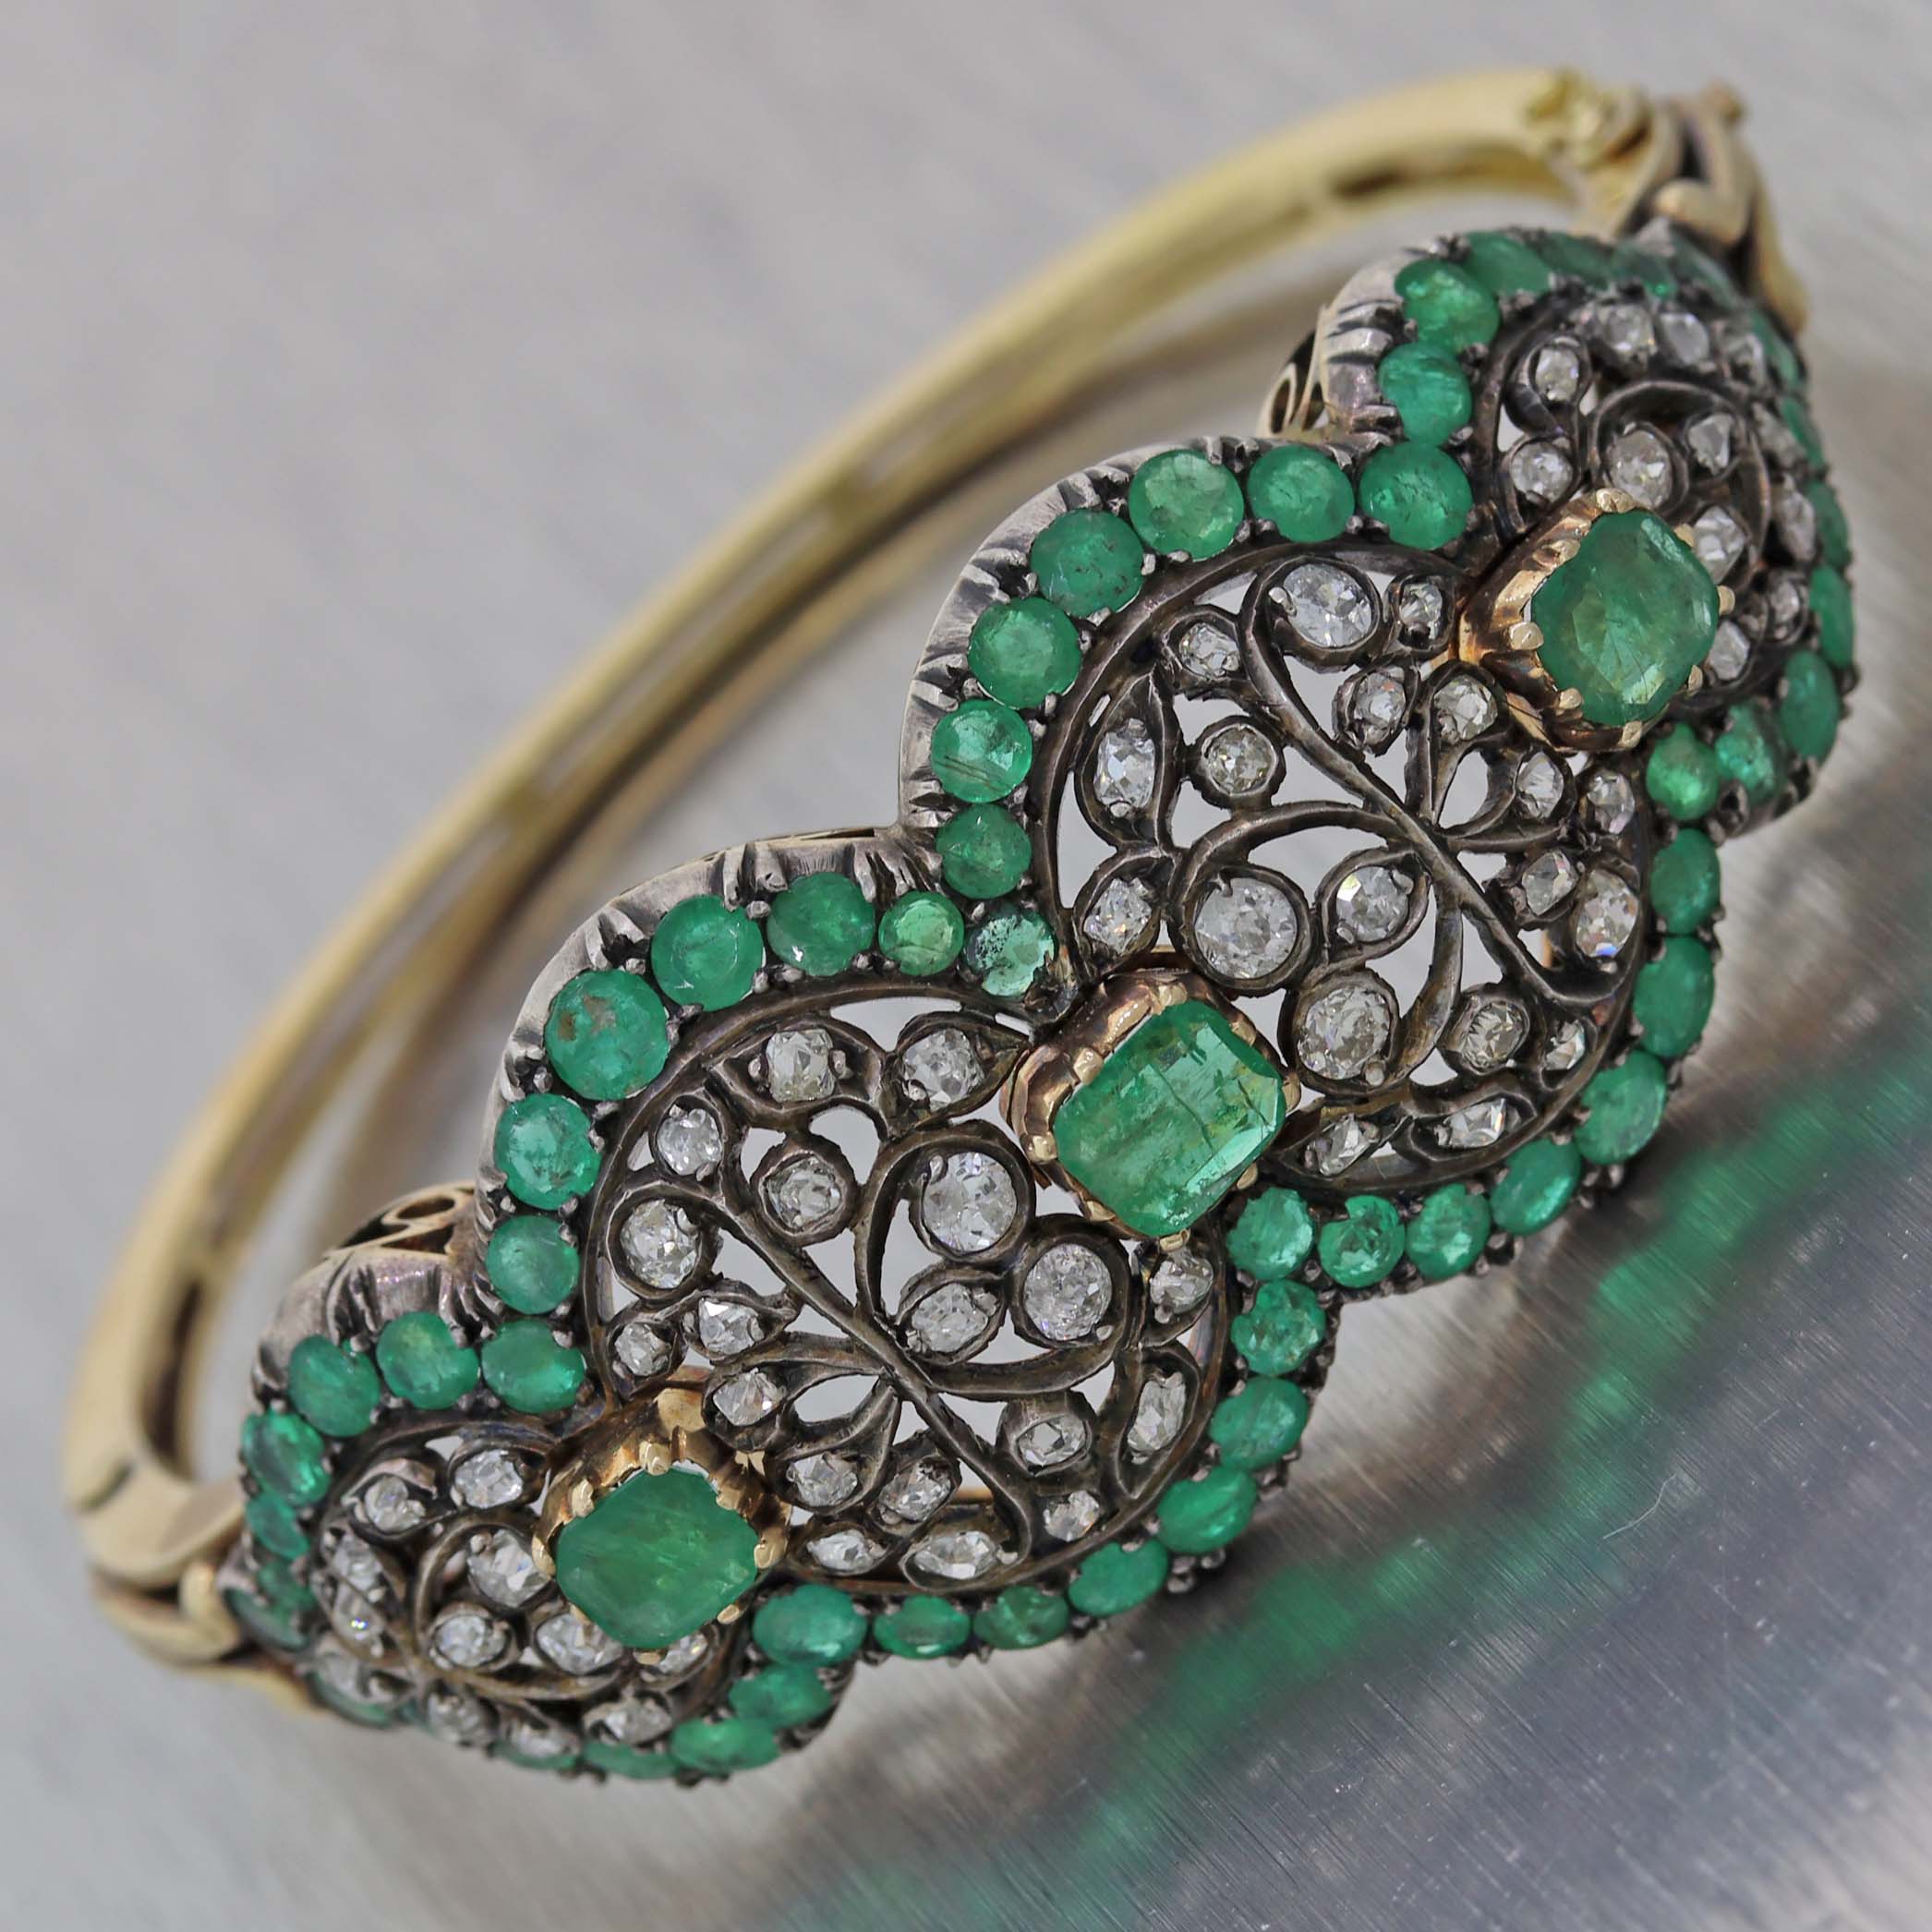 1890s Antique Victorian Silver on Gold 5ct Emerald Rose Cut Diamond Bangle Bracelet